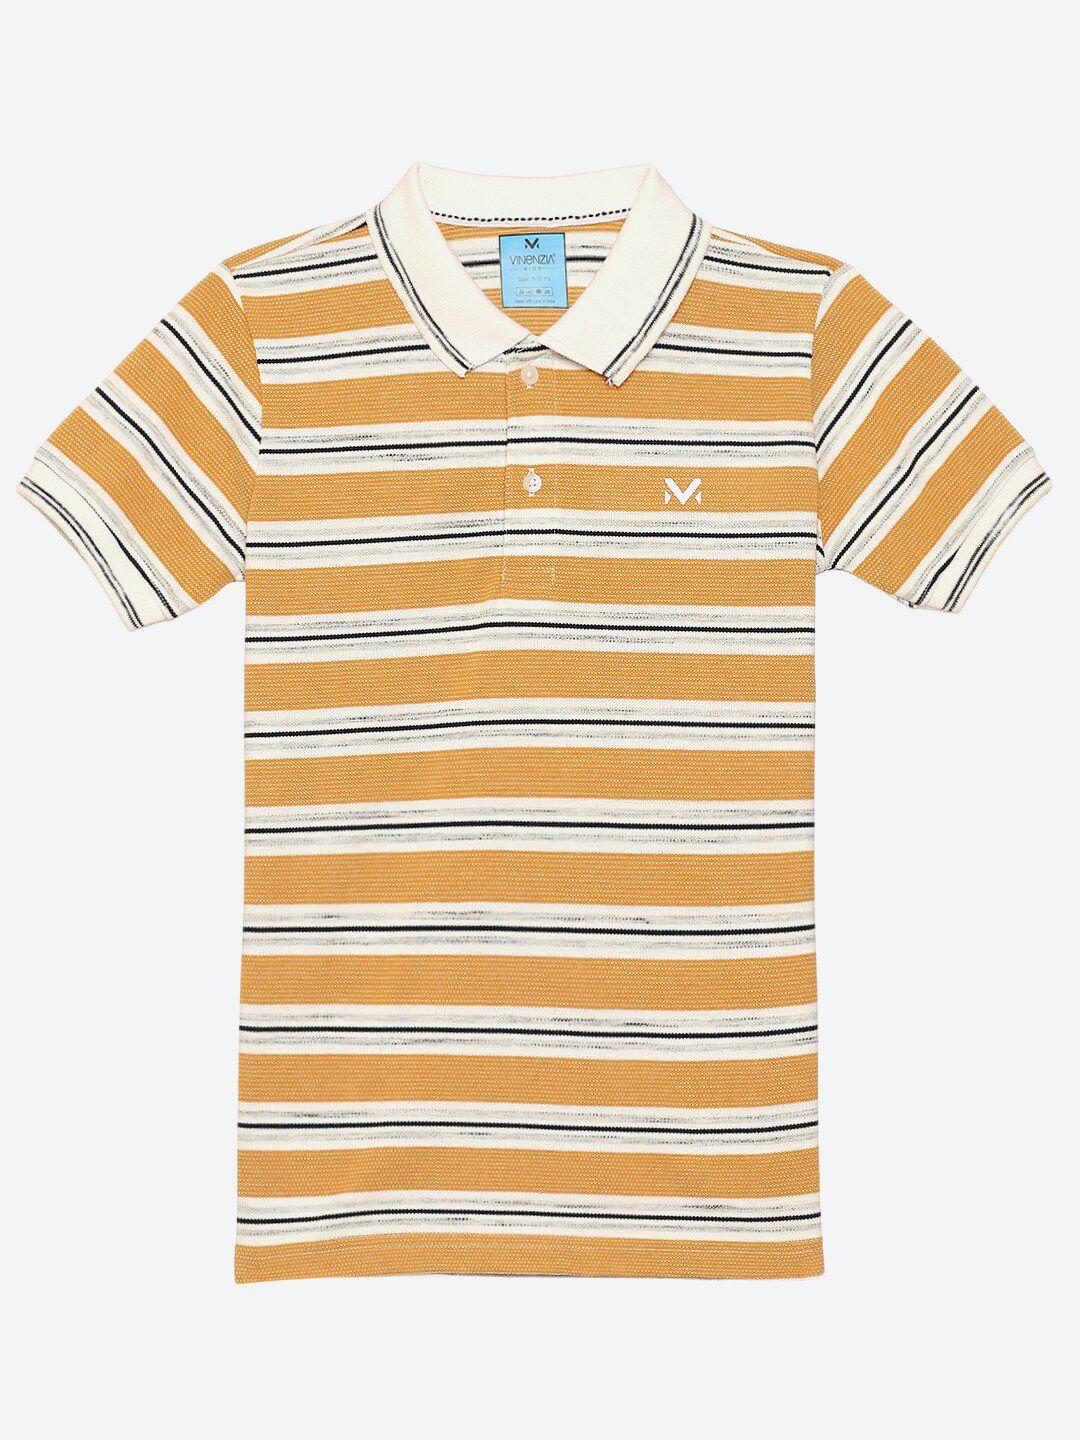 vinenzia boys mustard yellow striped henley neck t-shirt